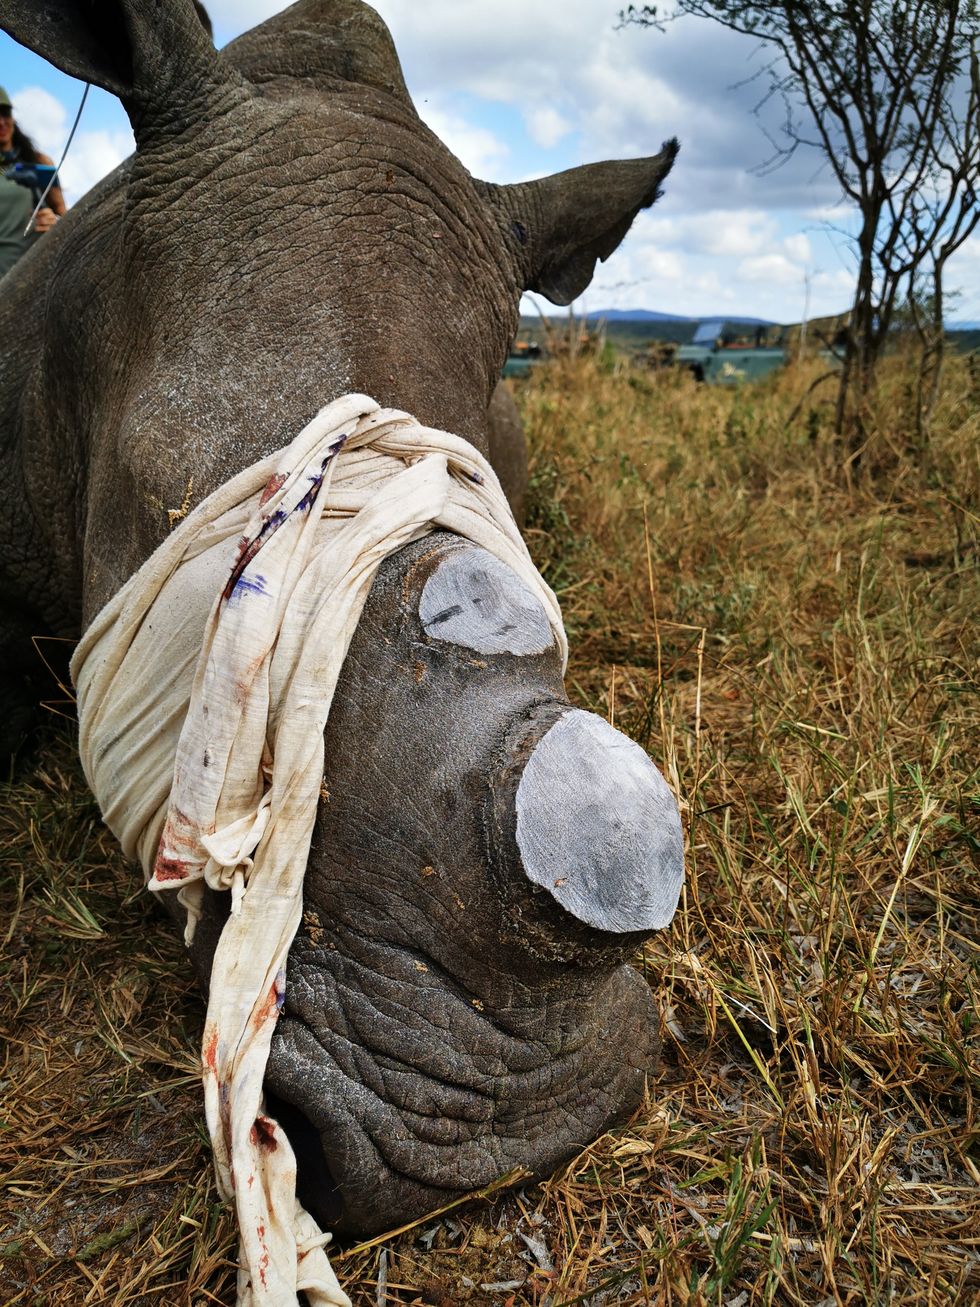 Black rhinoceros, White rhinoceros, Rhinoceros, Horn, Snout, Indian rhinoceros, Grass, Tree, Landscape, Bovine, 